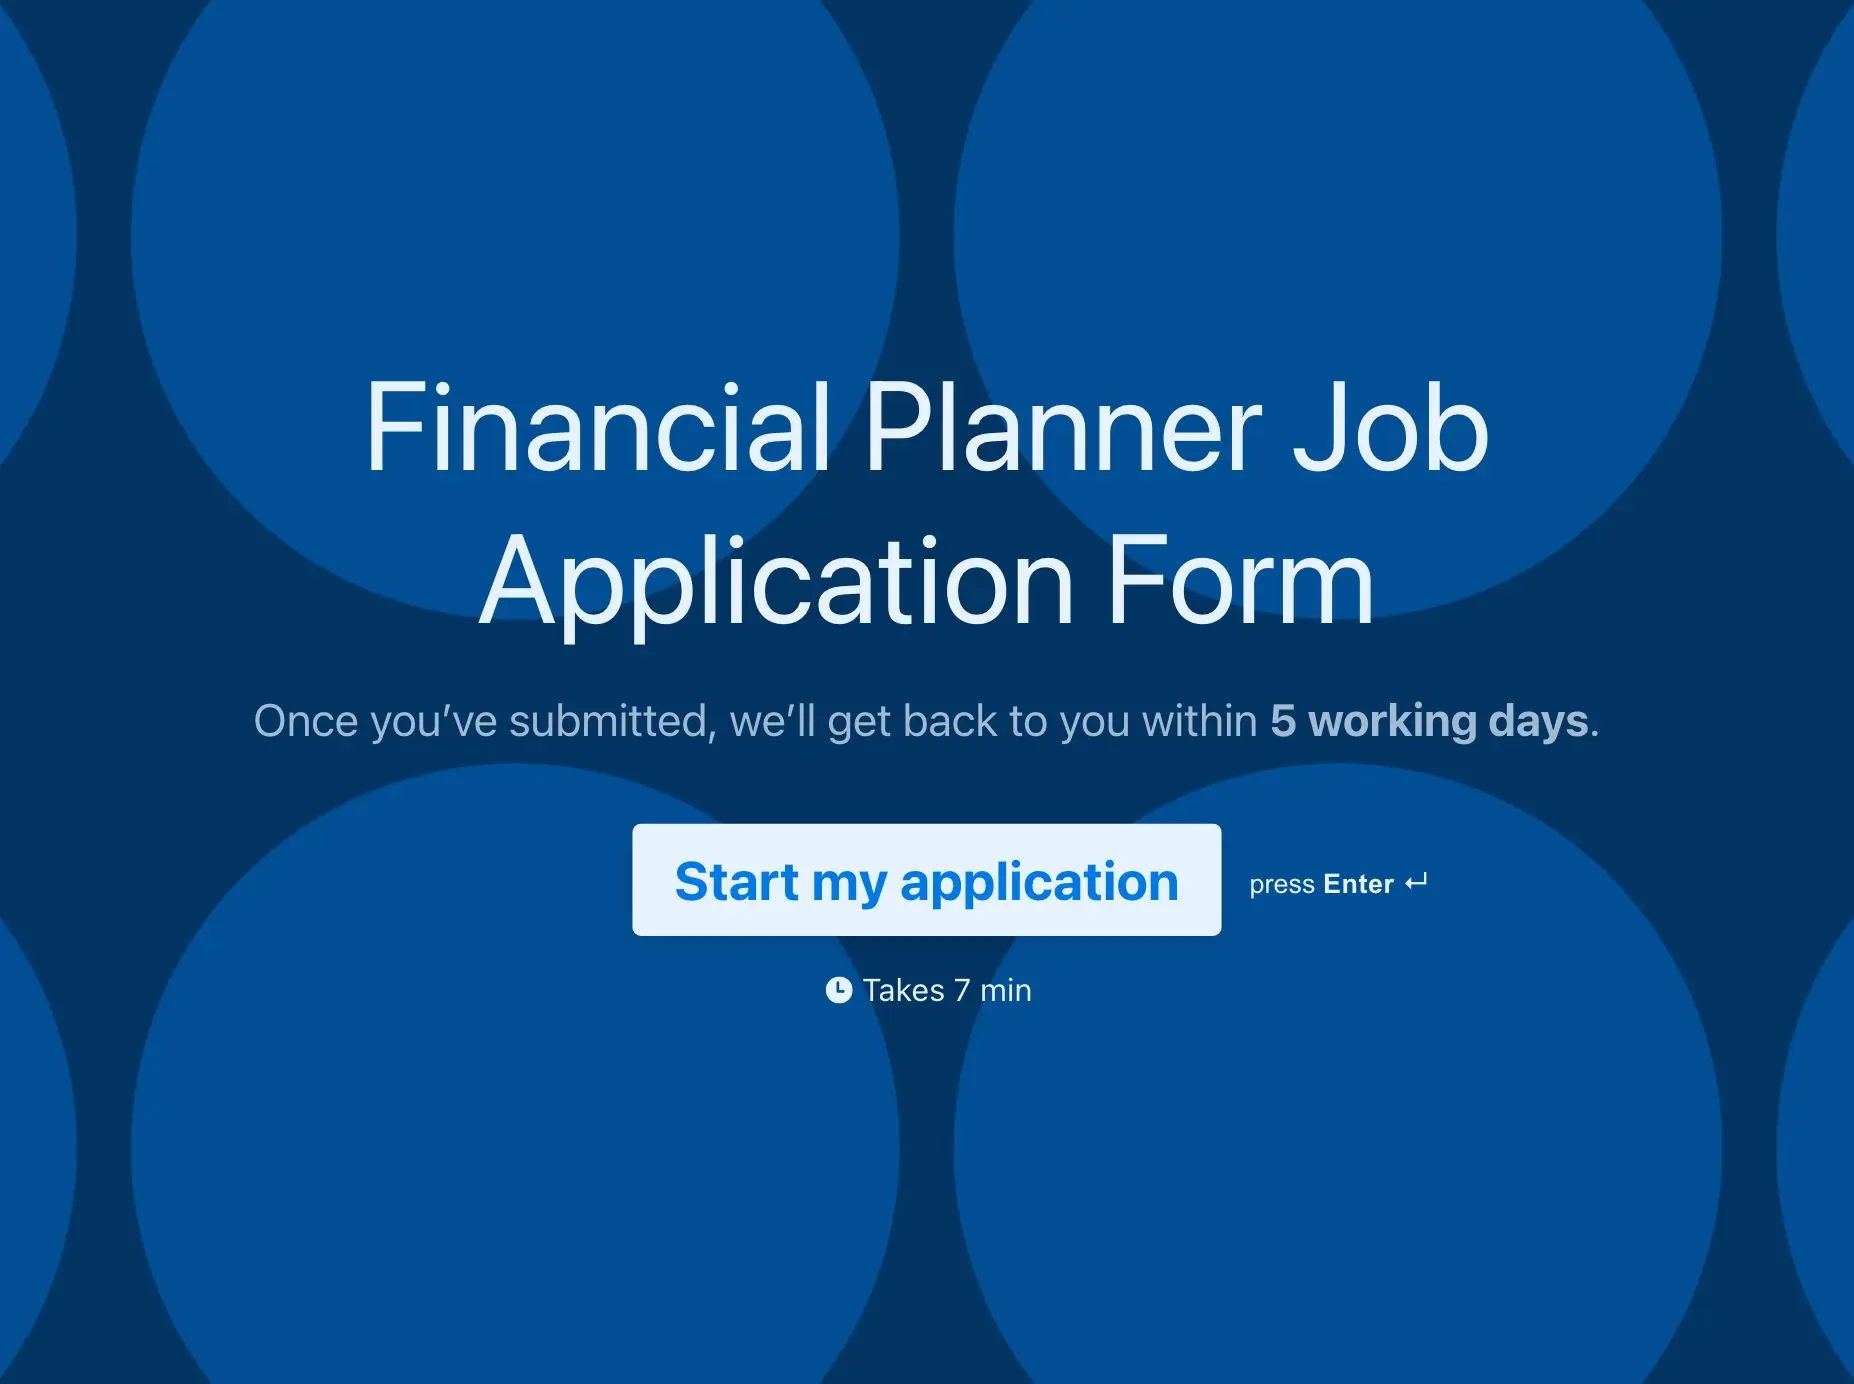 Financial Planner Job Application Form Template Hero